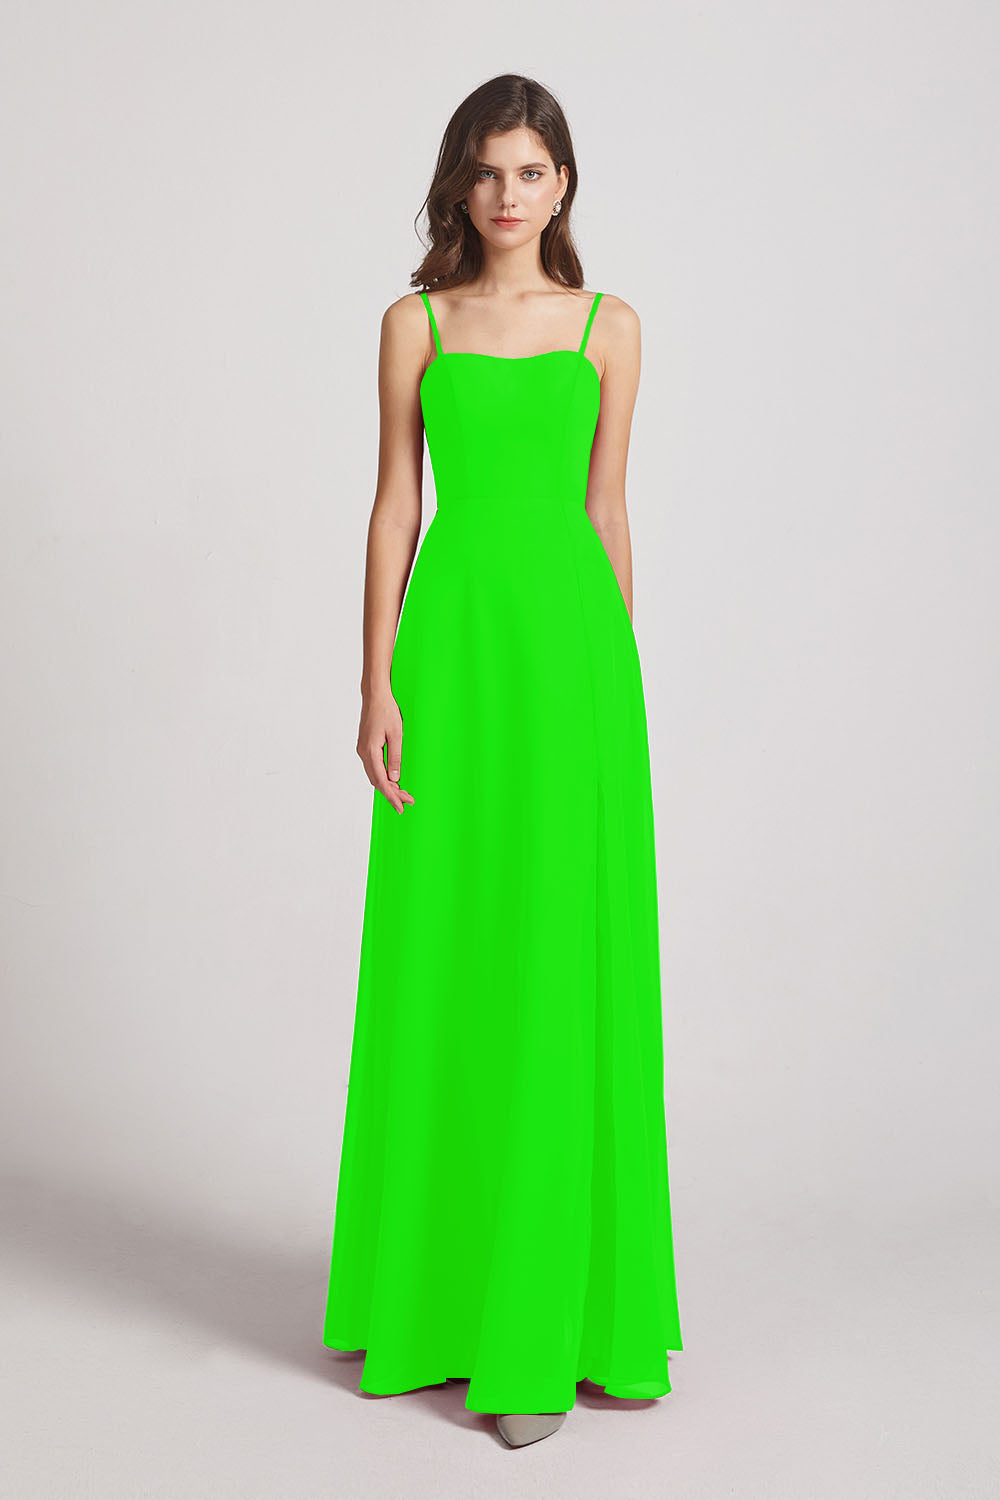 Alfa Bridal Lime Green Spaghetti Straps Long Chiffon Bridesmaid Dresses with Side Slit (AF0112)